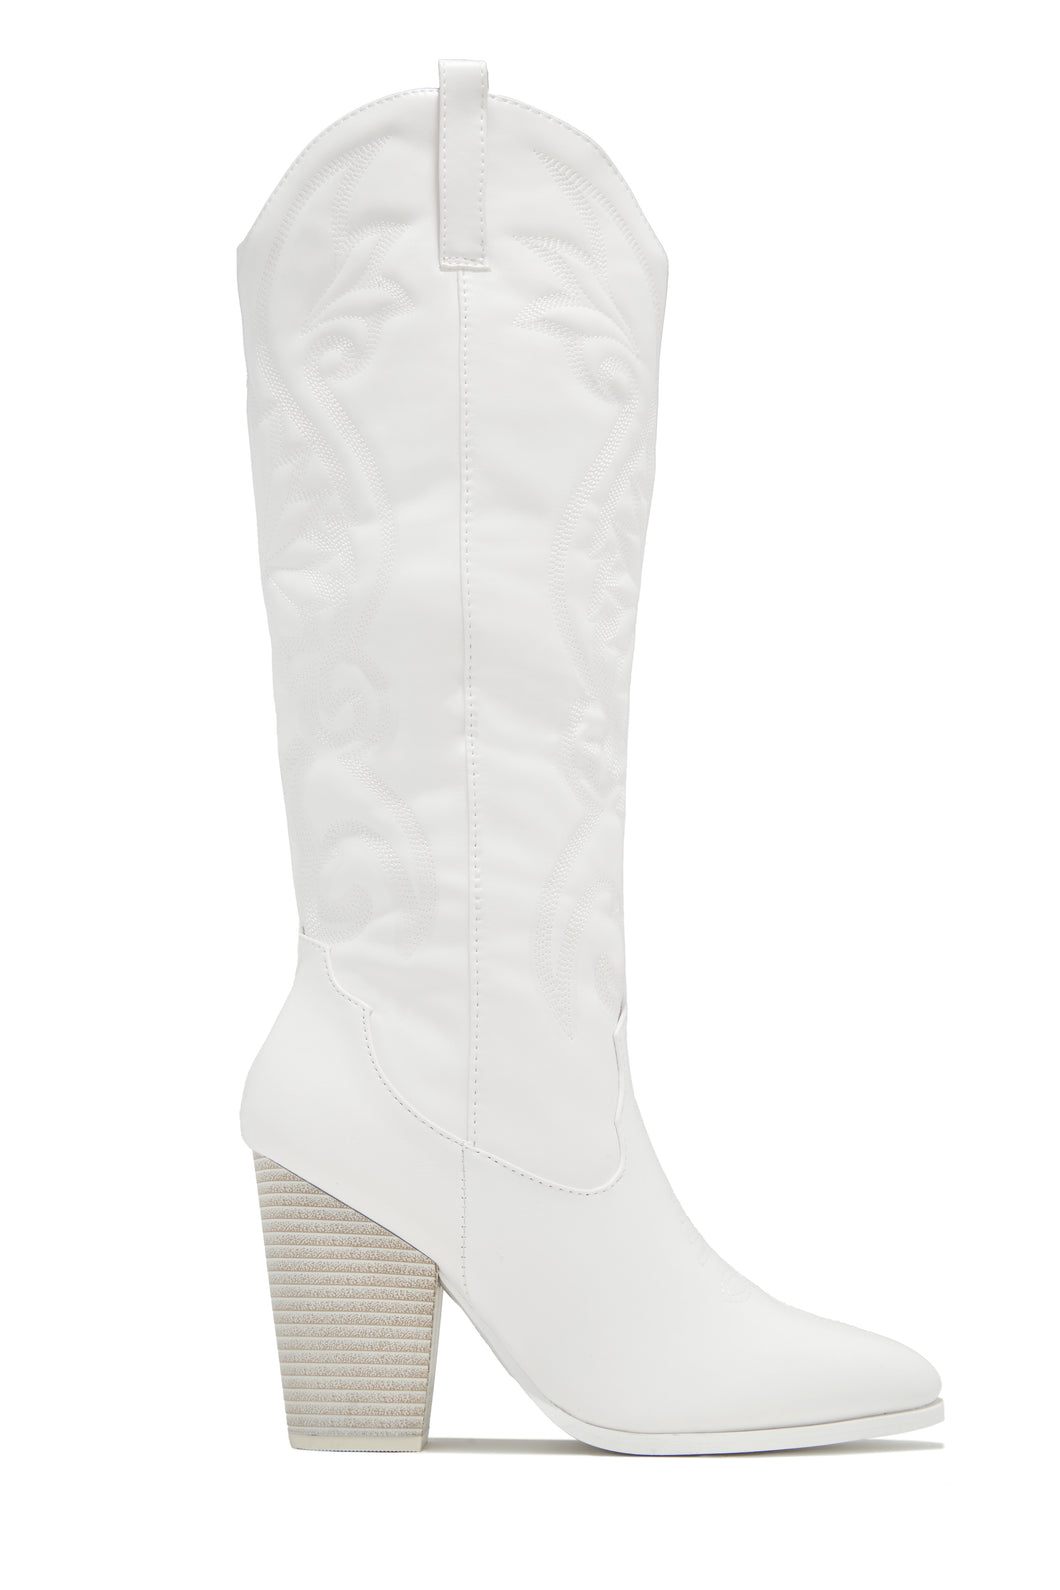 Jordyn Cowgirl Boots - White